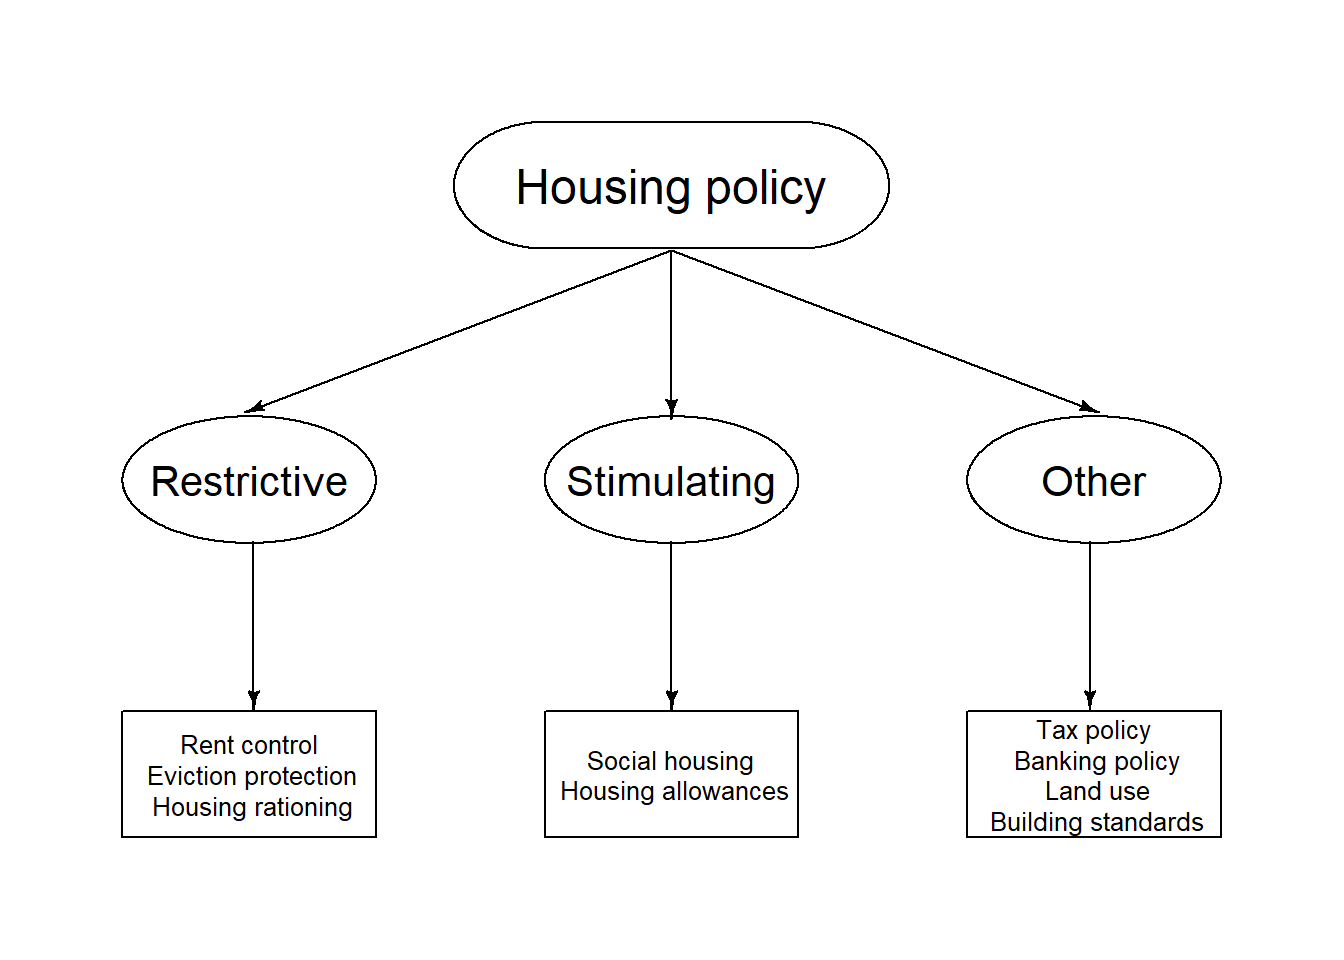 Housing policy tools: wide and narrow sense